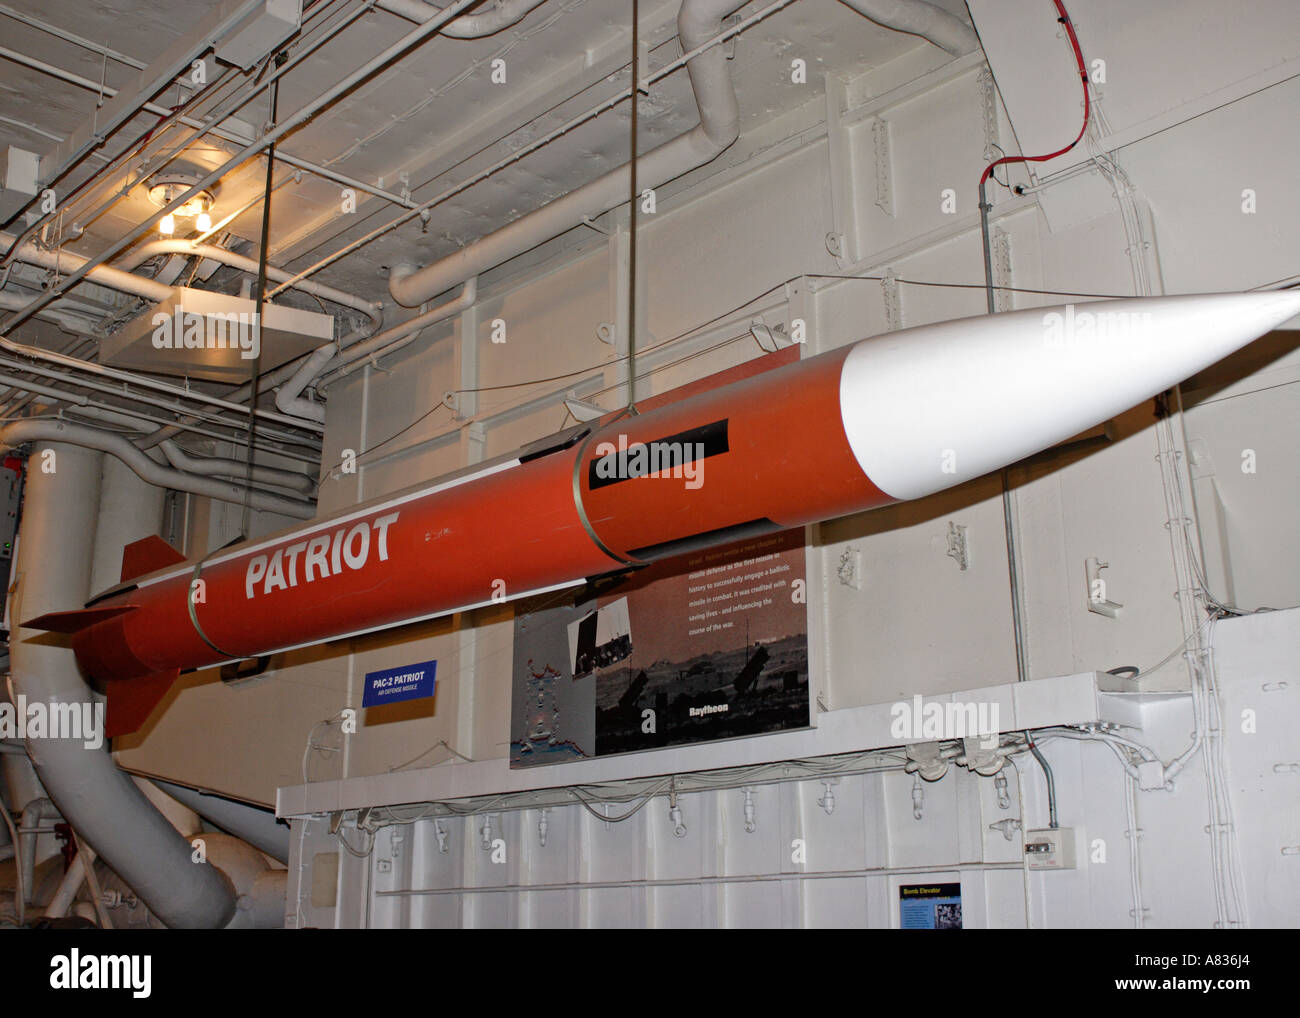 patriot-missile-aboard-the-uss-intrepid-A836J4.jpg